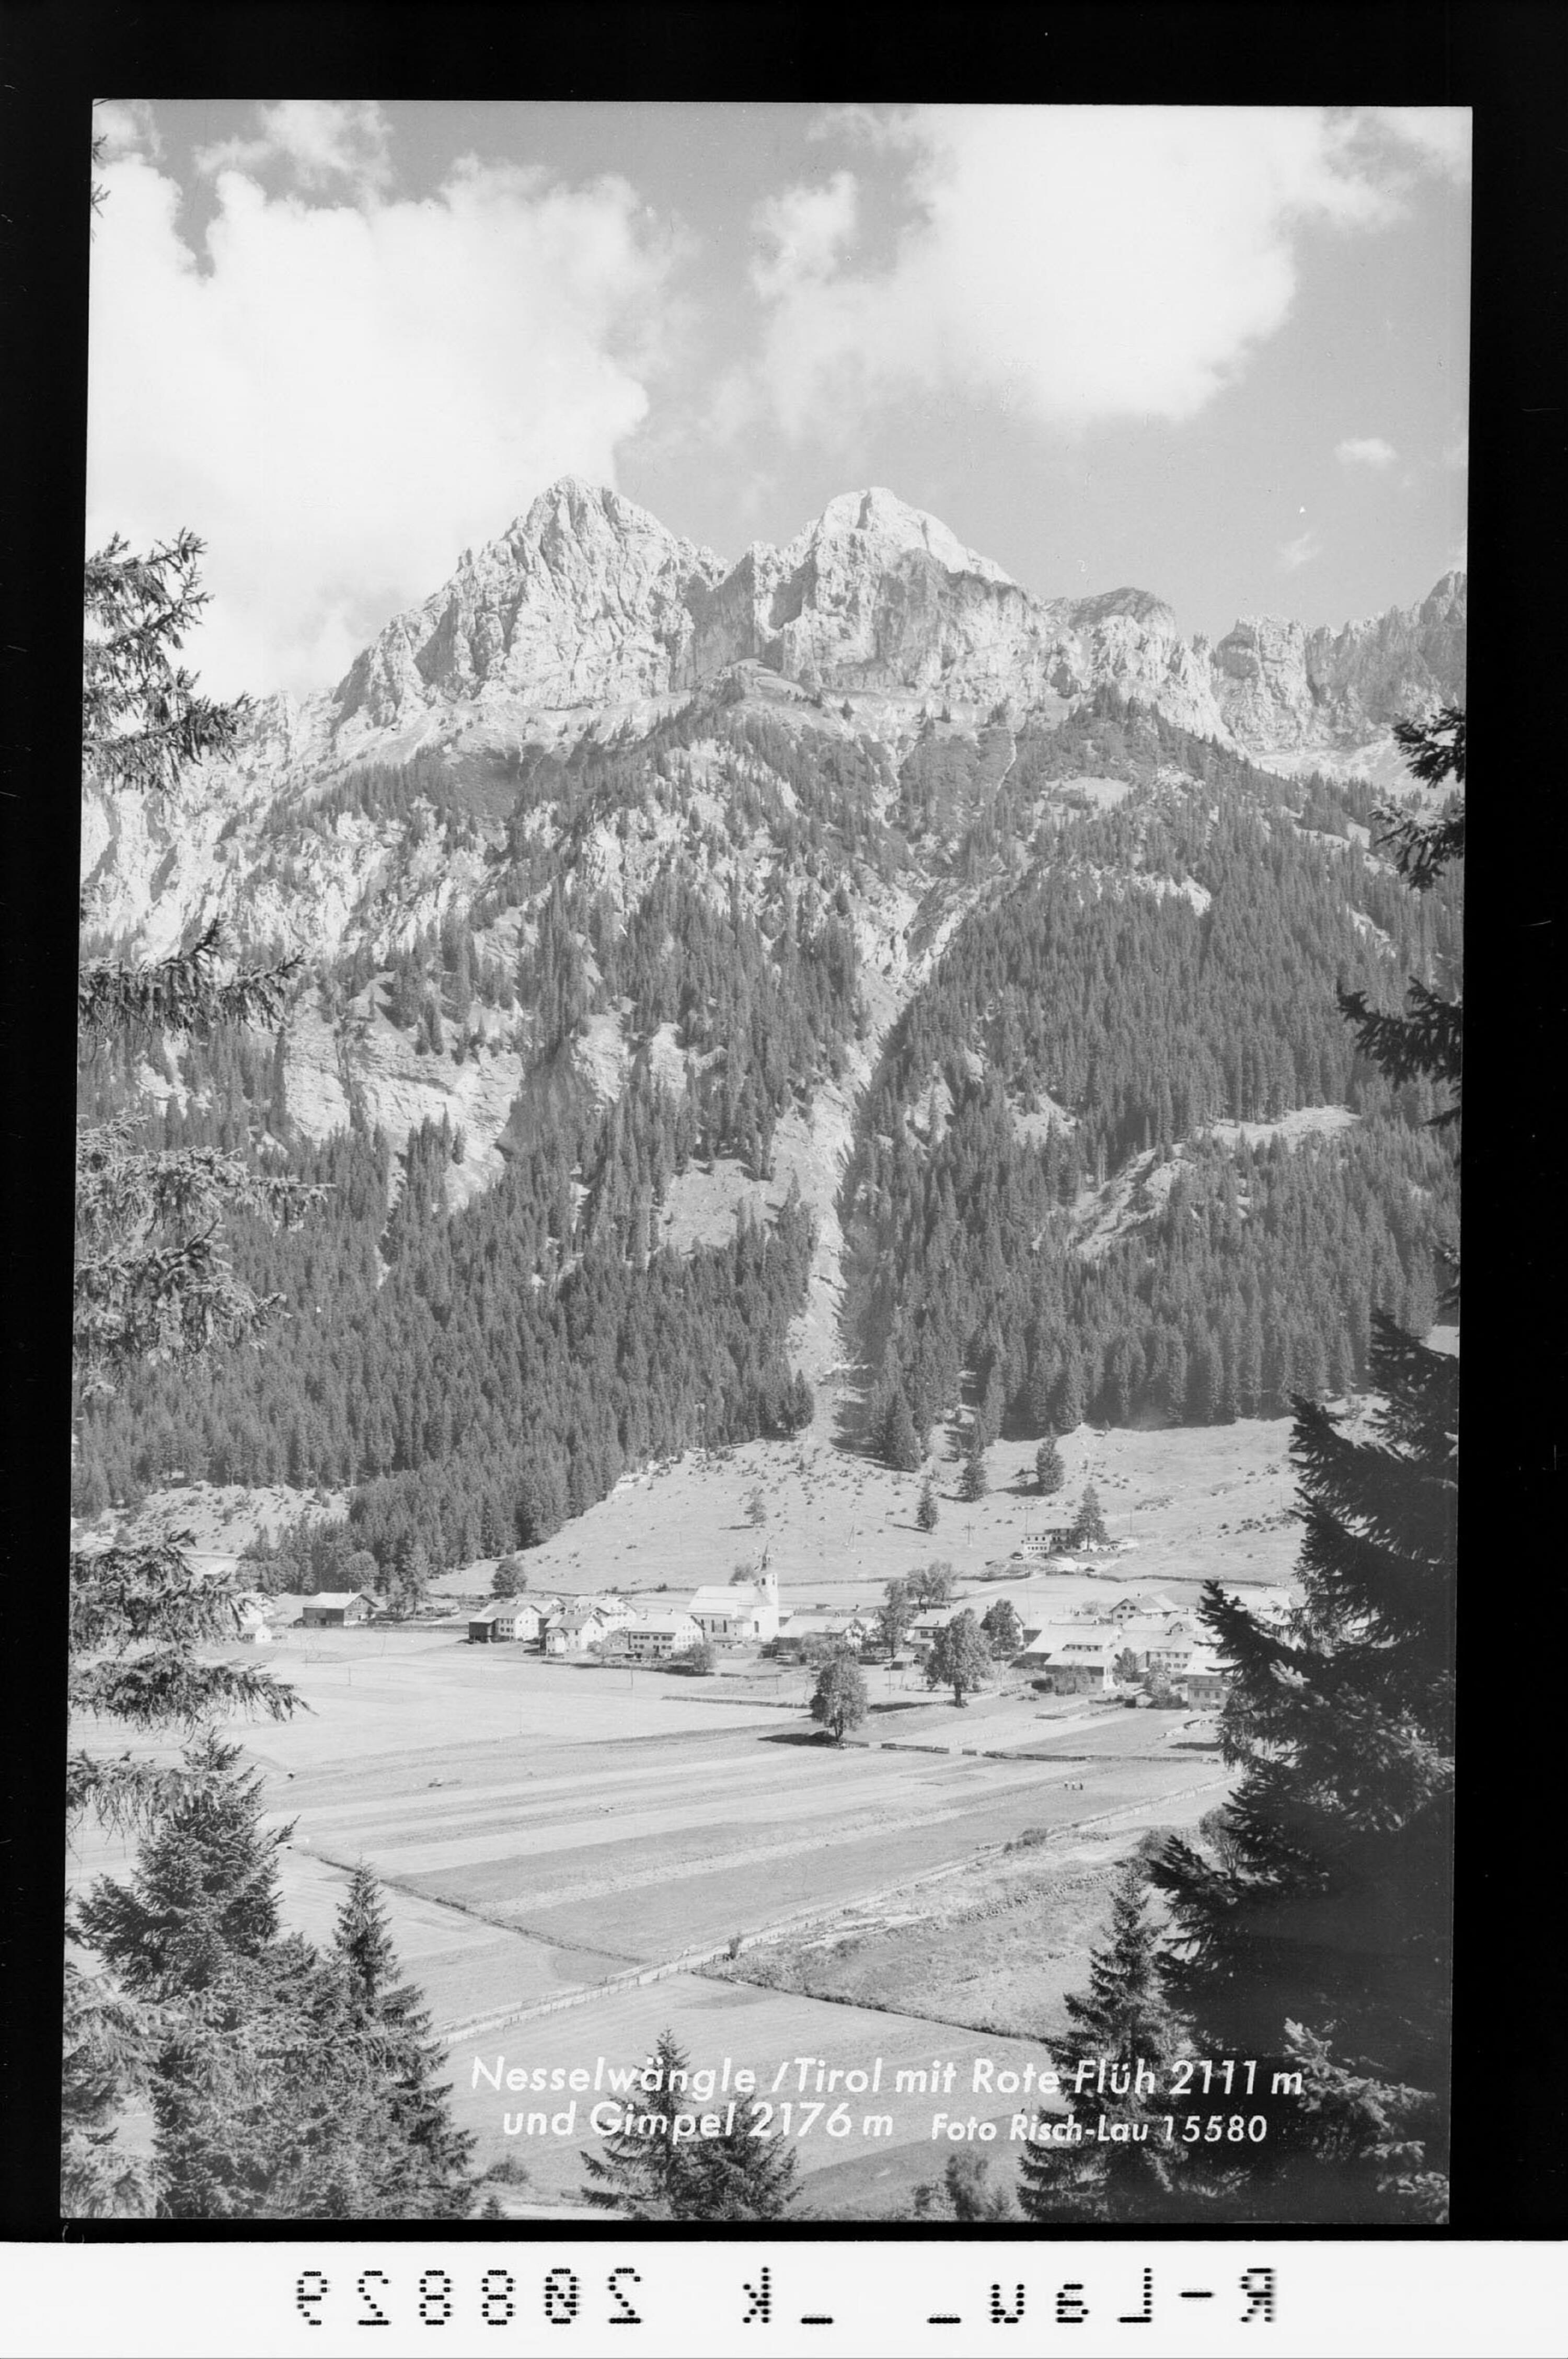 Nesselwängle in Tirol mit Rote Flüh 2111 m und Gimpel 2176 m></div>


    <hr>
    <div class=